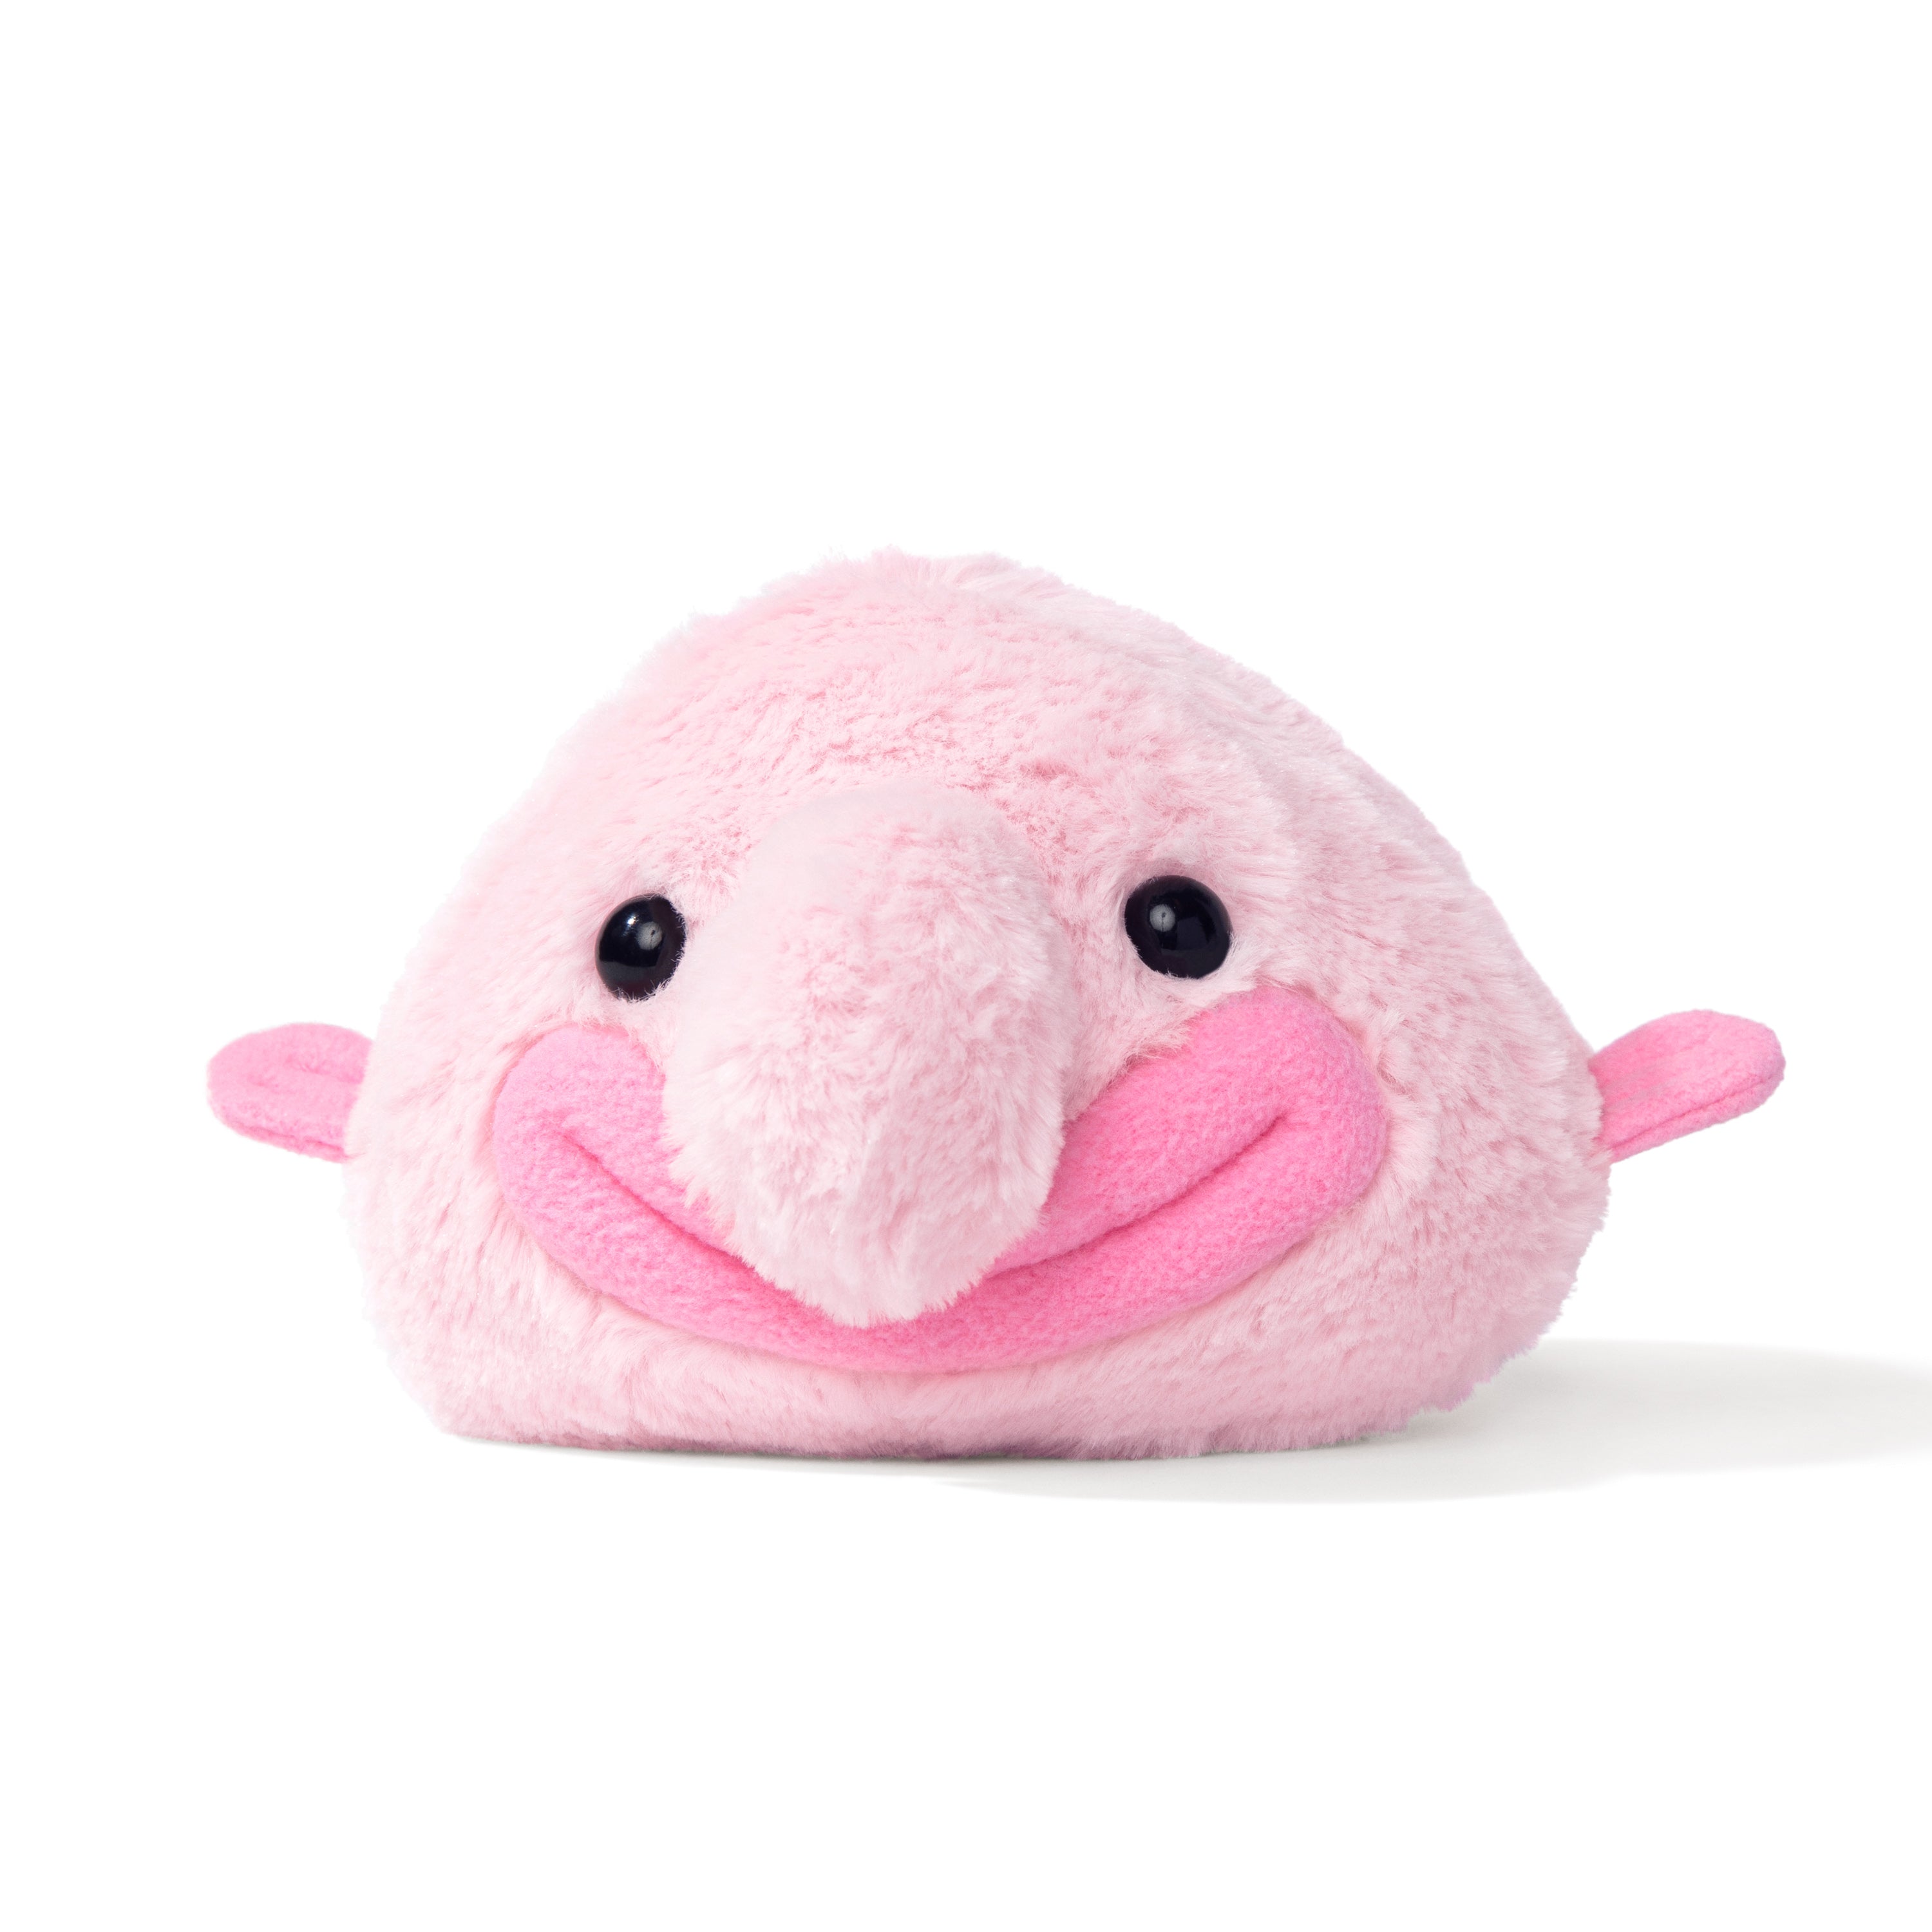 Blobby the Blobfish – Uncute